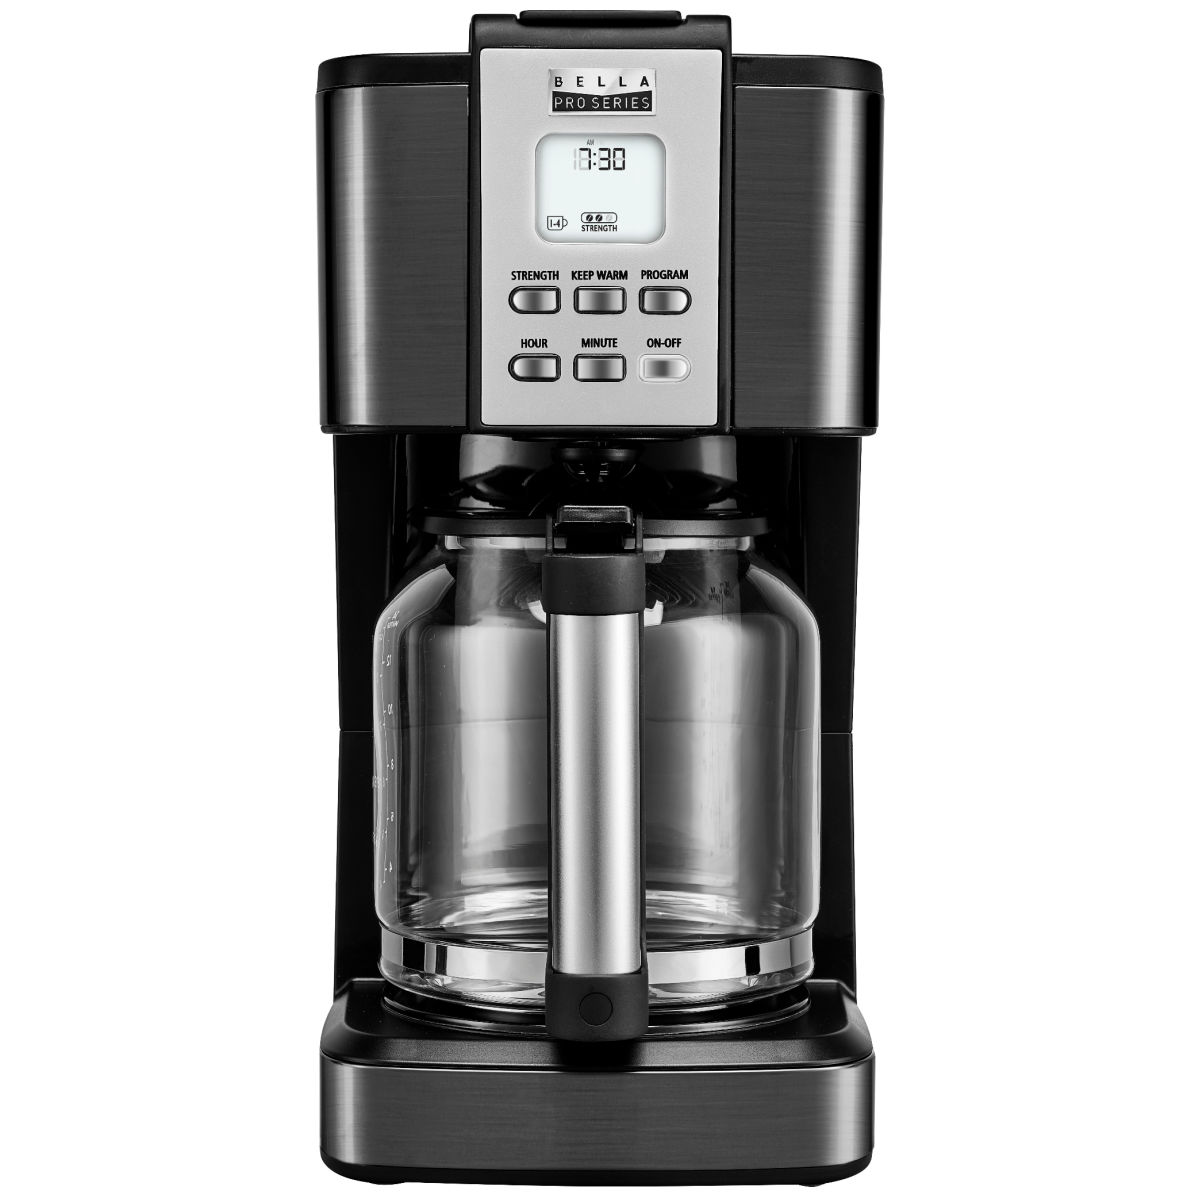 Bella 90061 Pro Series 14 Cup Coffee Maker 